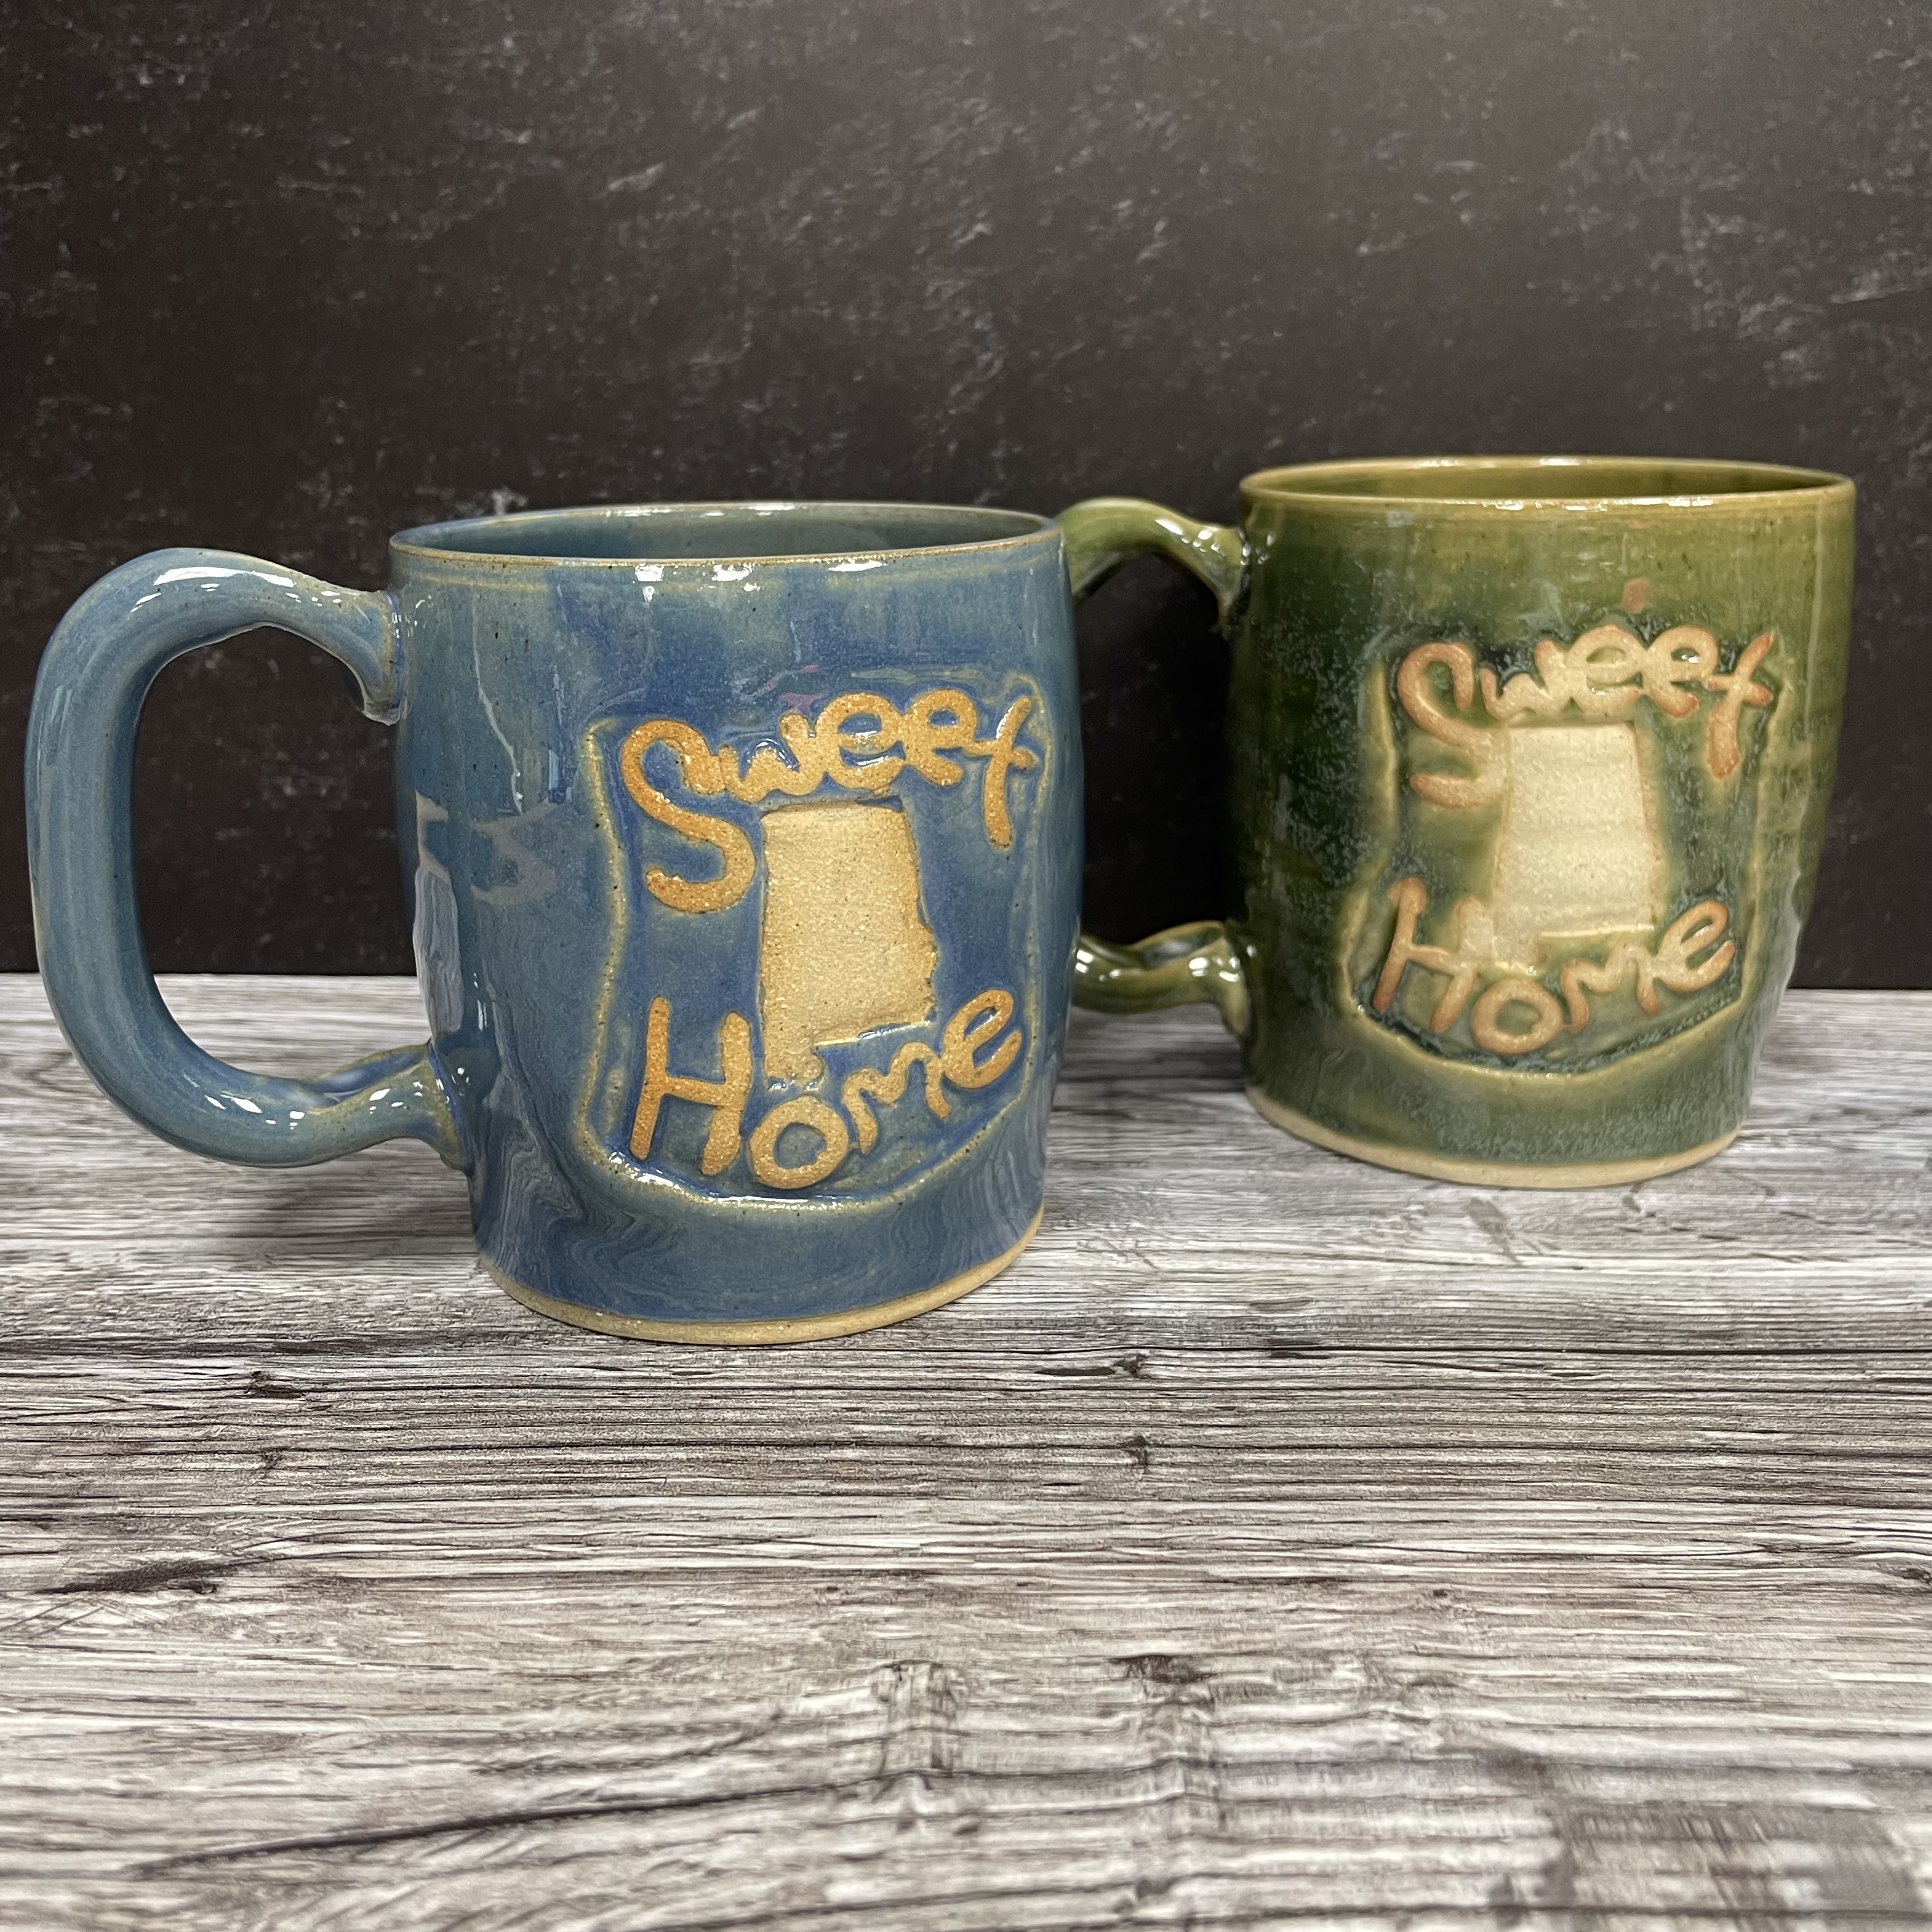 Home Sweet Home Coffee Mug Gift Set